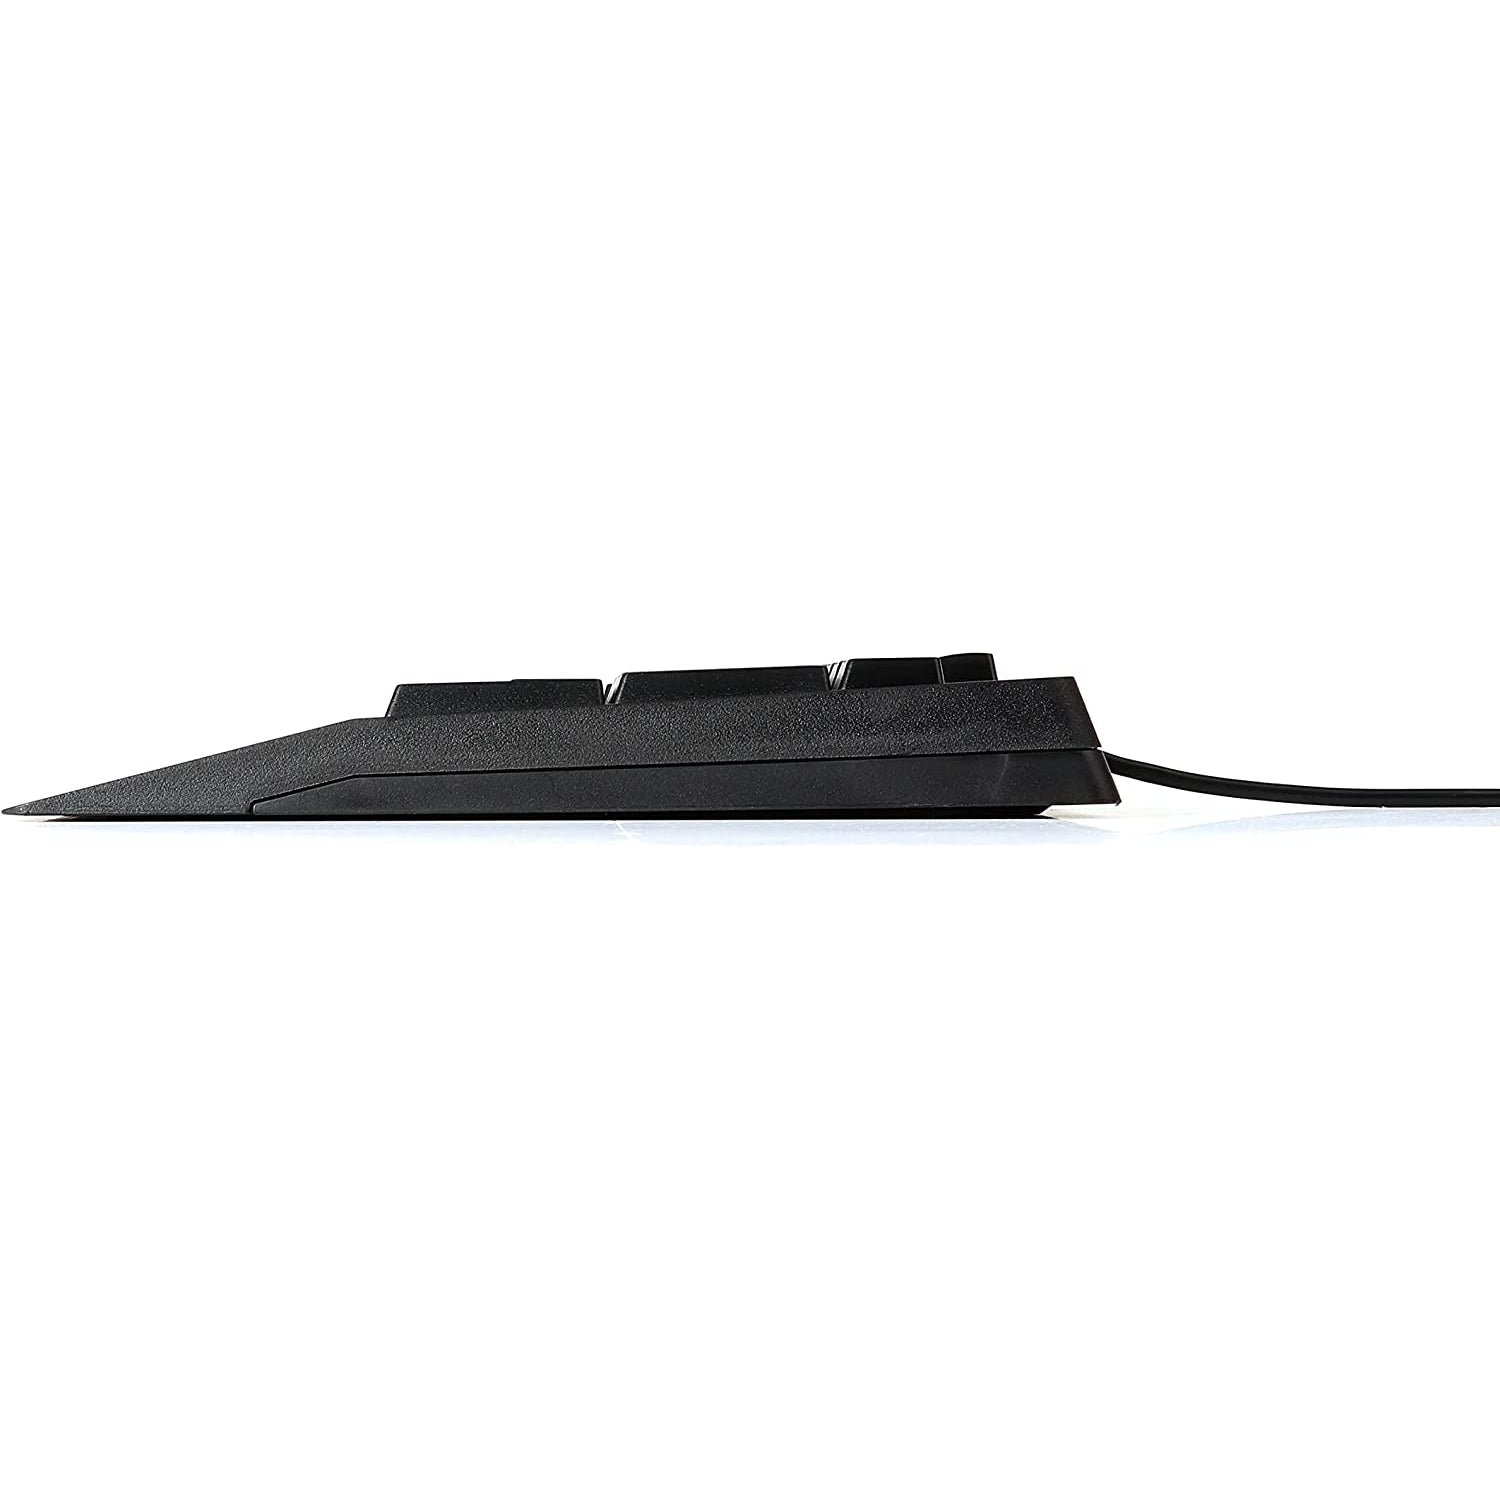 Rapoo NK2000 Spill Resistant Wired Keyboard, Black - Refurbished Pristine